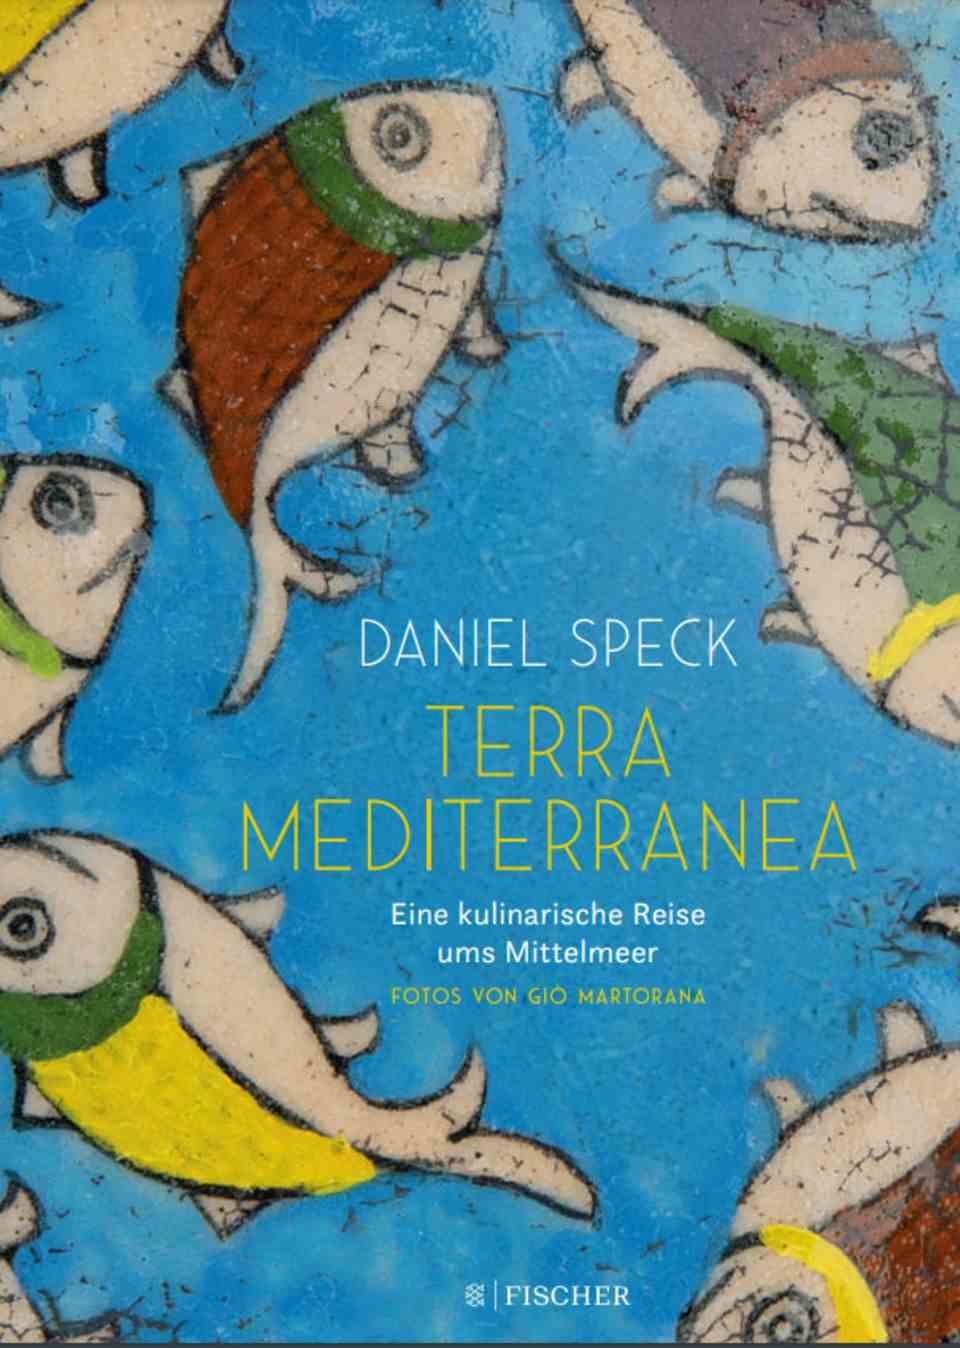 covers of "Terra Mediterranea"